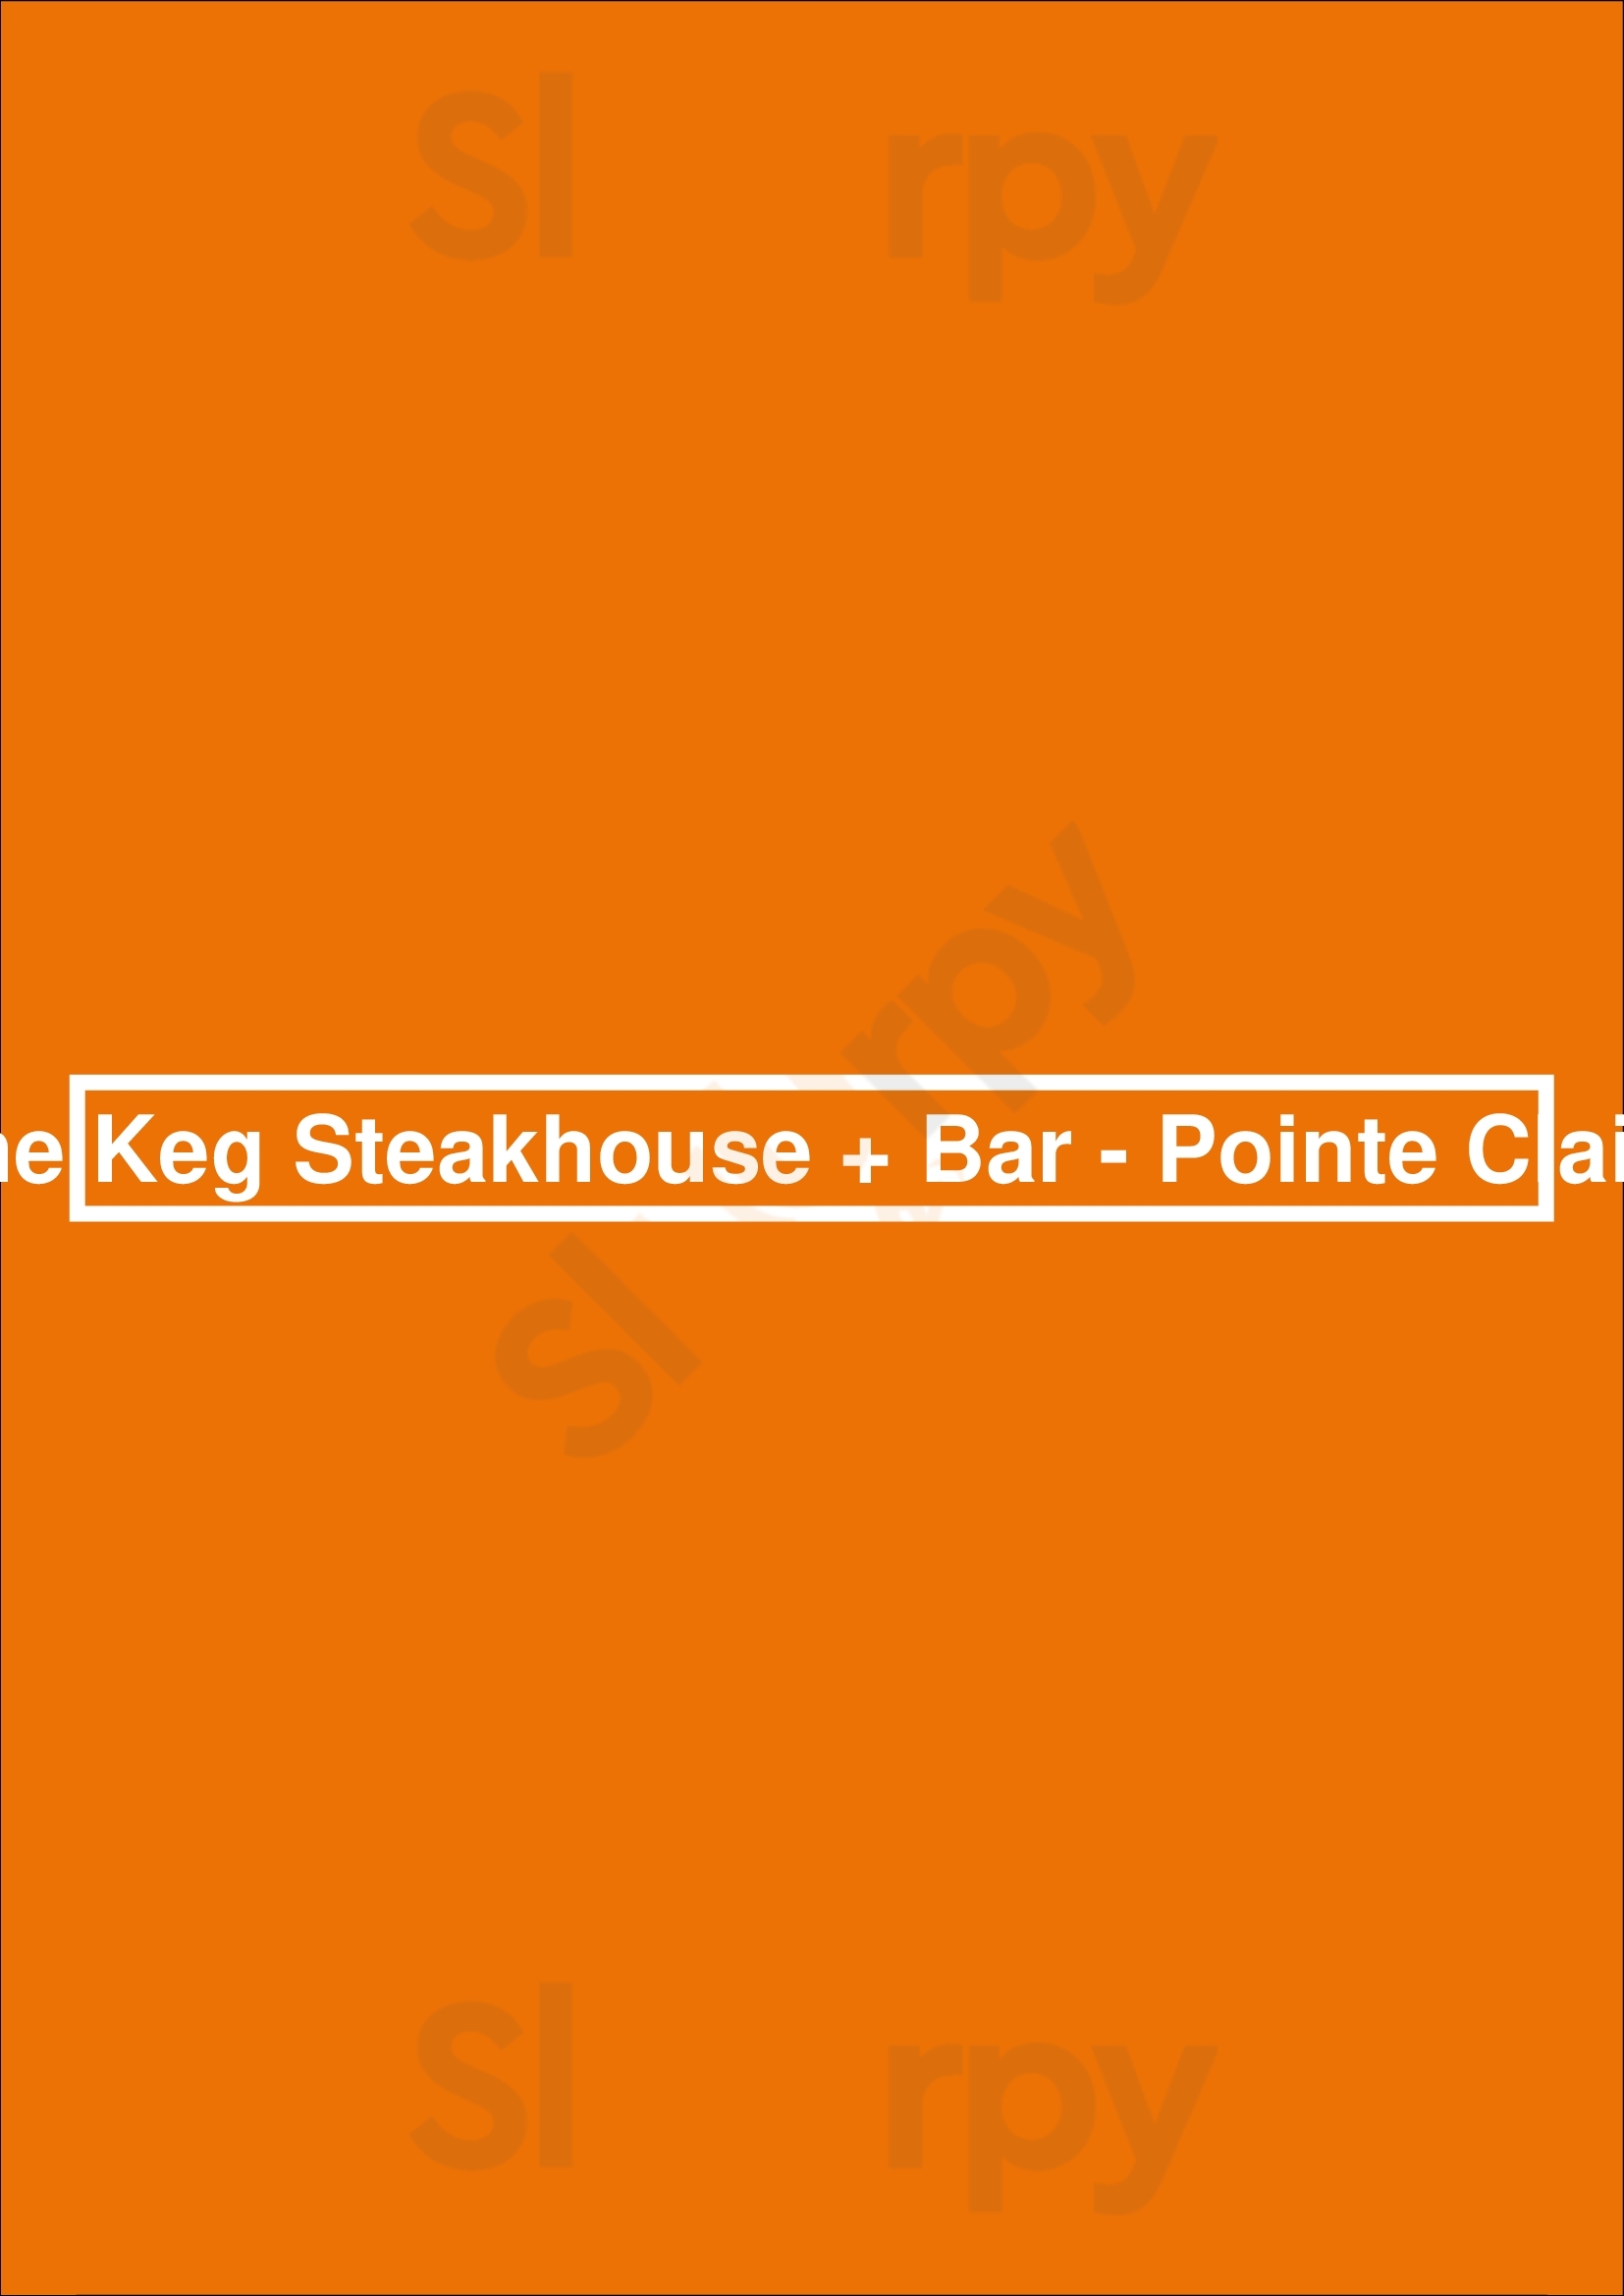 The Keg Steakhouse + Bar - Pointe Claire Pointe Claire Menu - 1